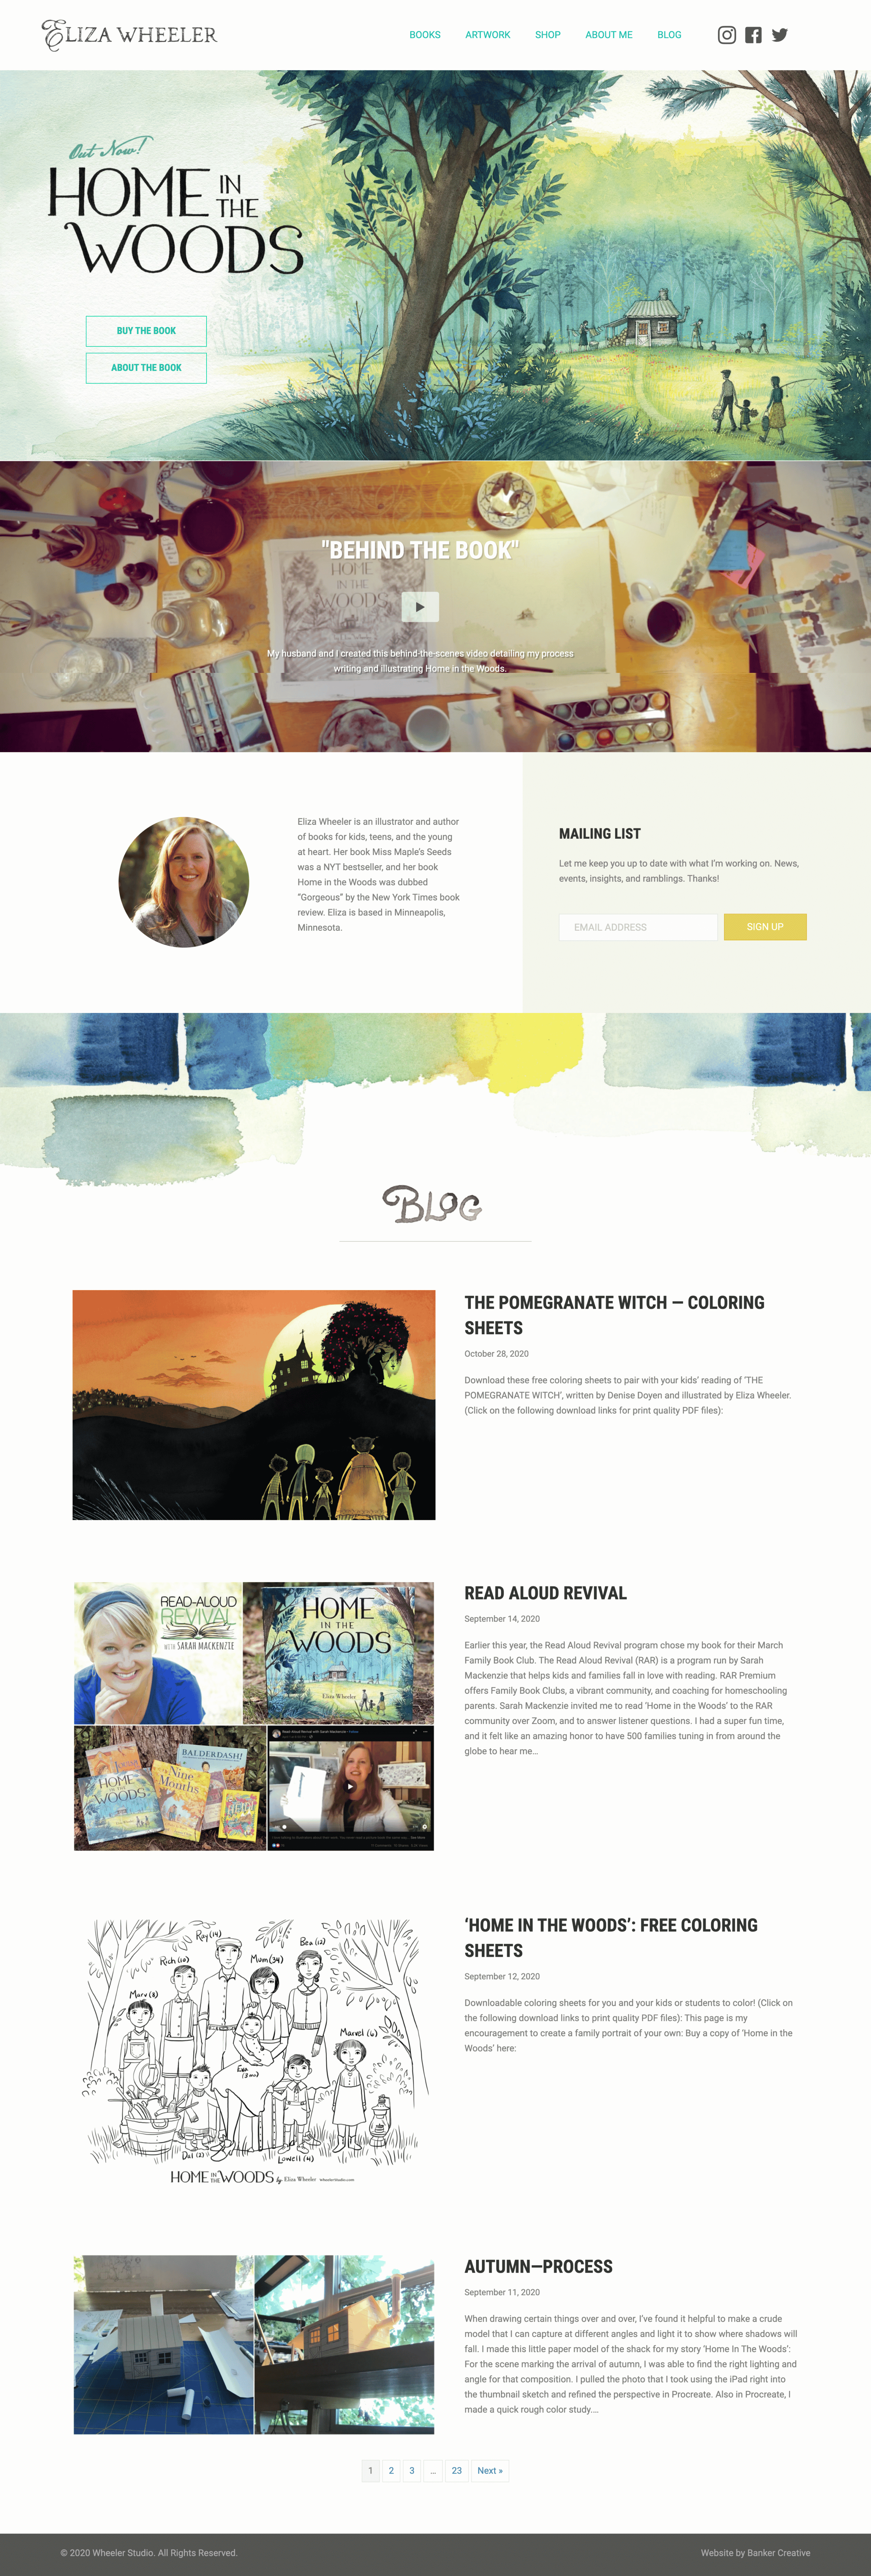 Full page screenshot of Eliza Wheeler's homepage.